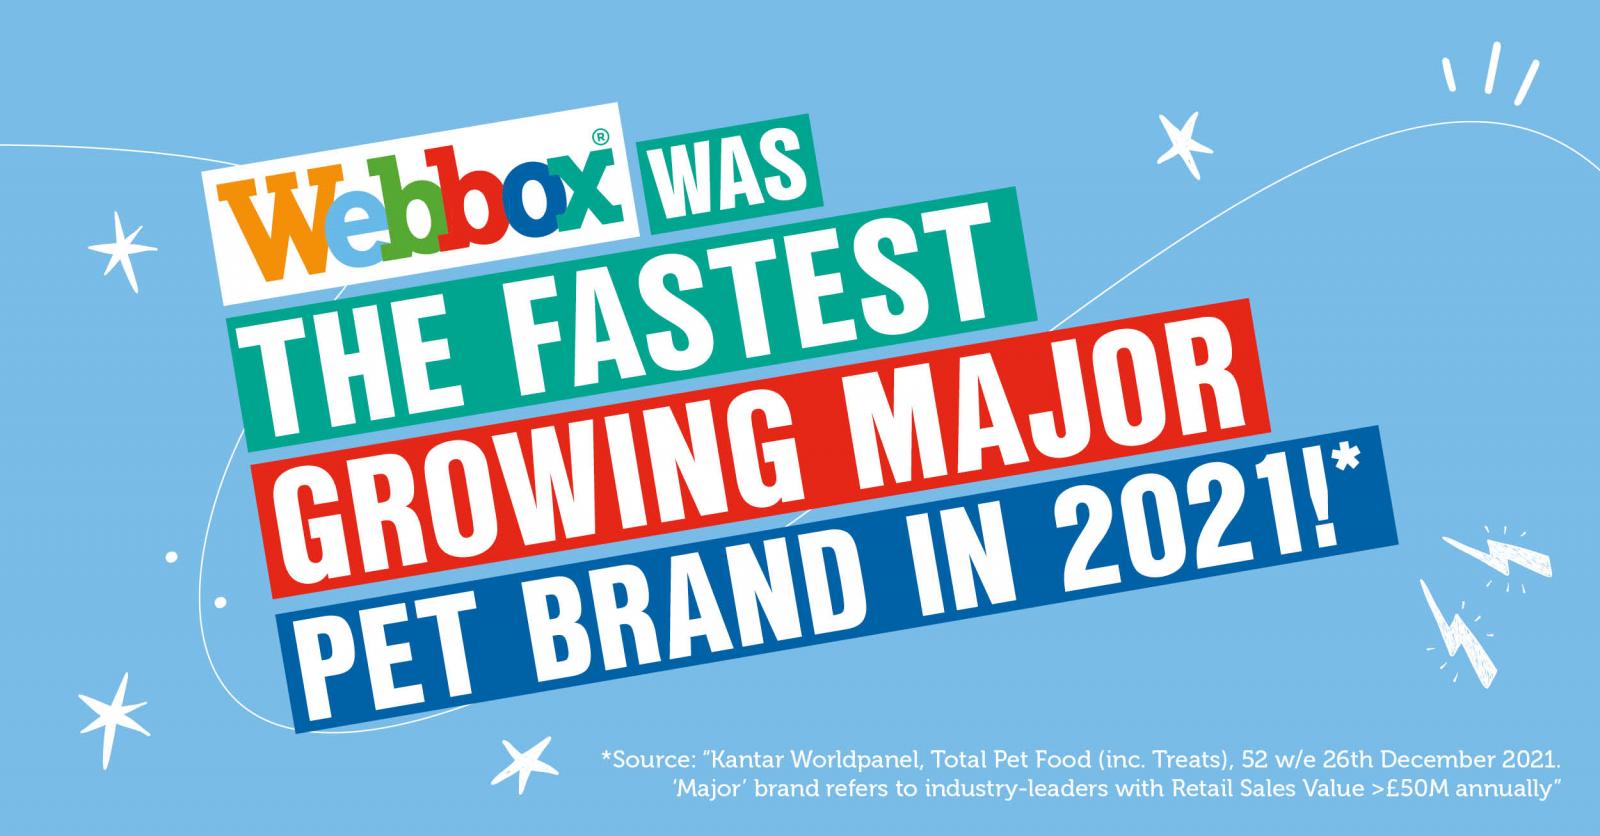 Webbox was the fastest growing major pet brand in 2021